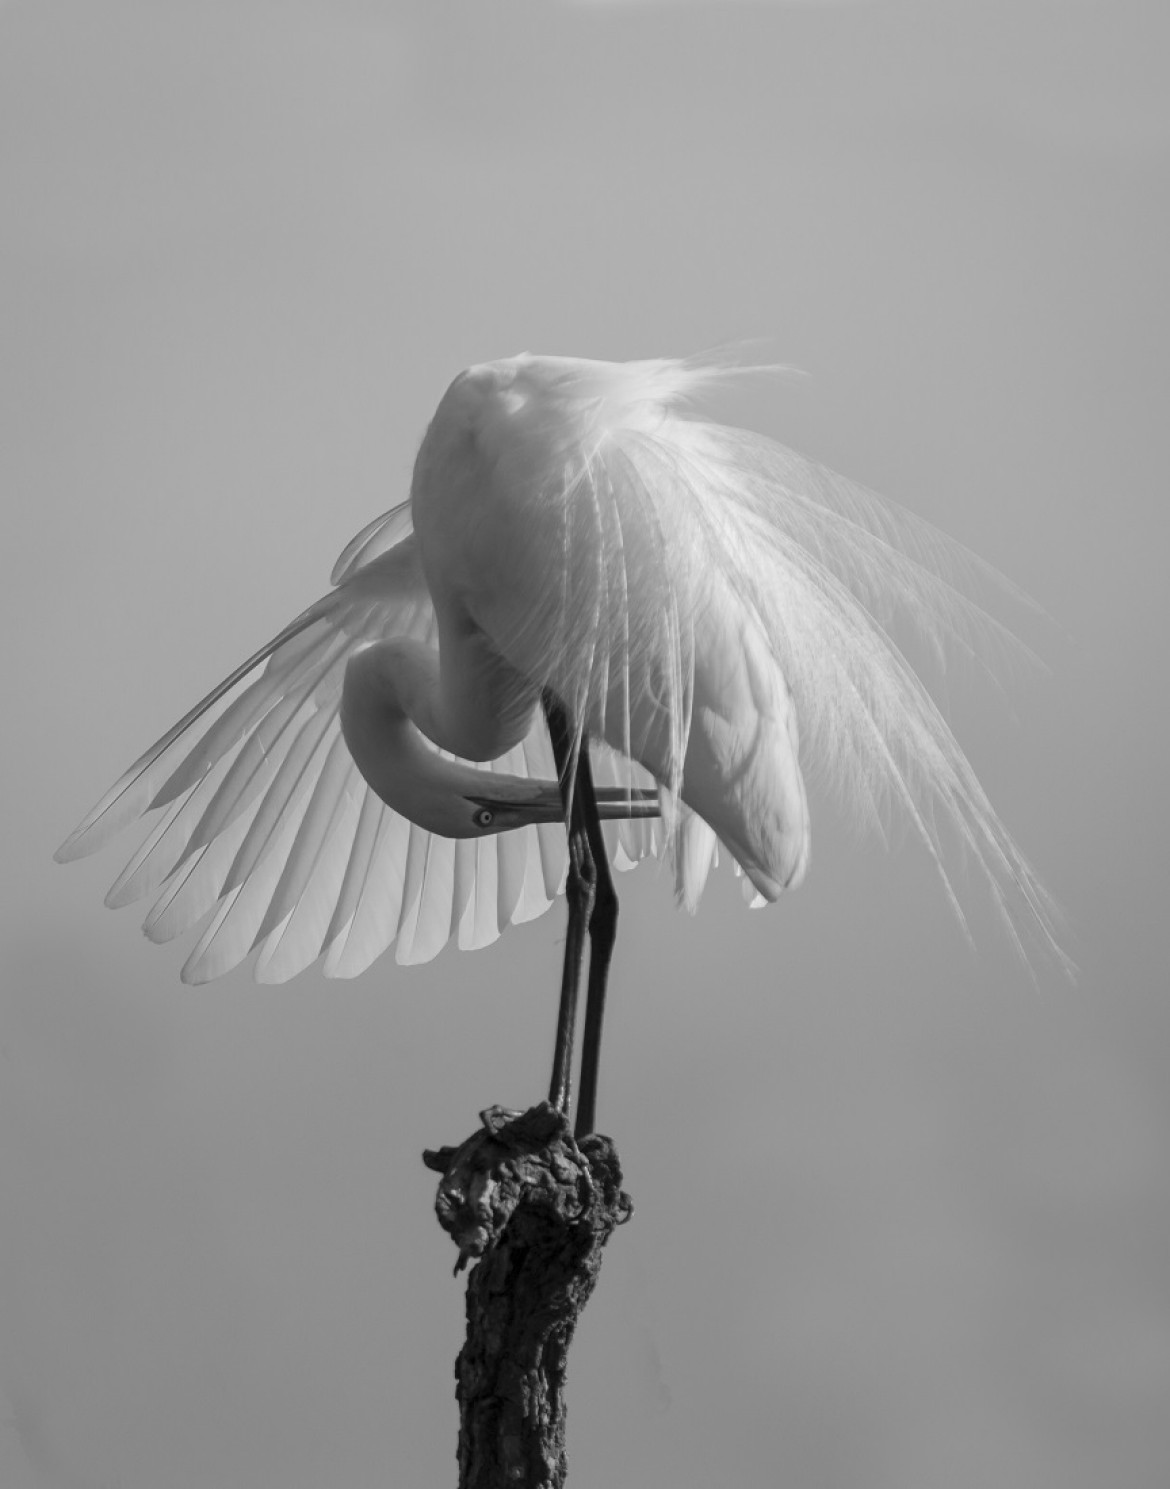 fot. Caroline Peppiatt, z cyklu "Egret Grooming Ballet", 3. nagroda w kategorii Nature & Wildlife / Monovisions Photography Awards 2019